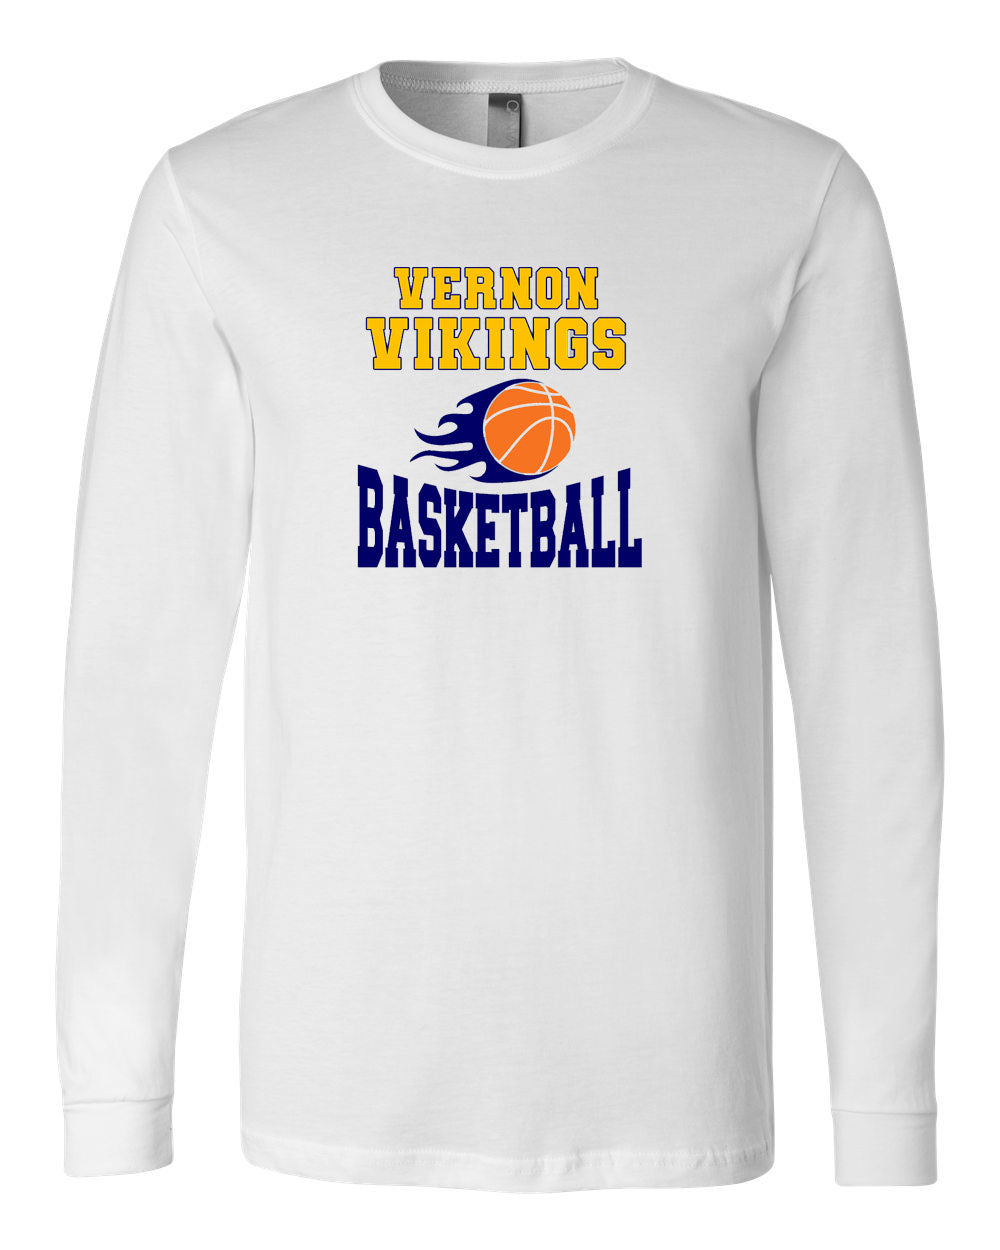 Vikings Basketball  Design 4 Long Sleeve Shirt